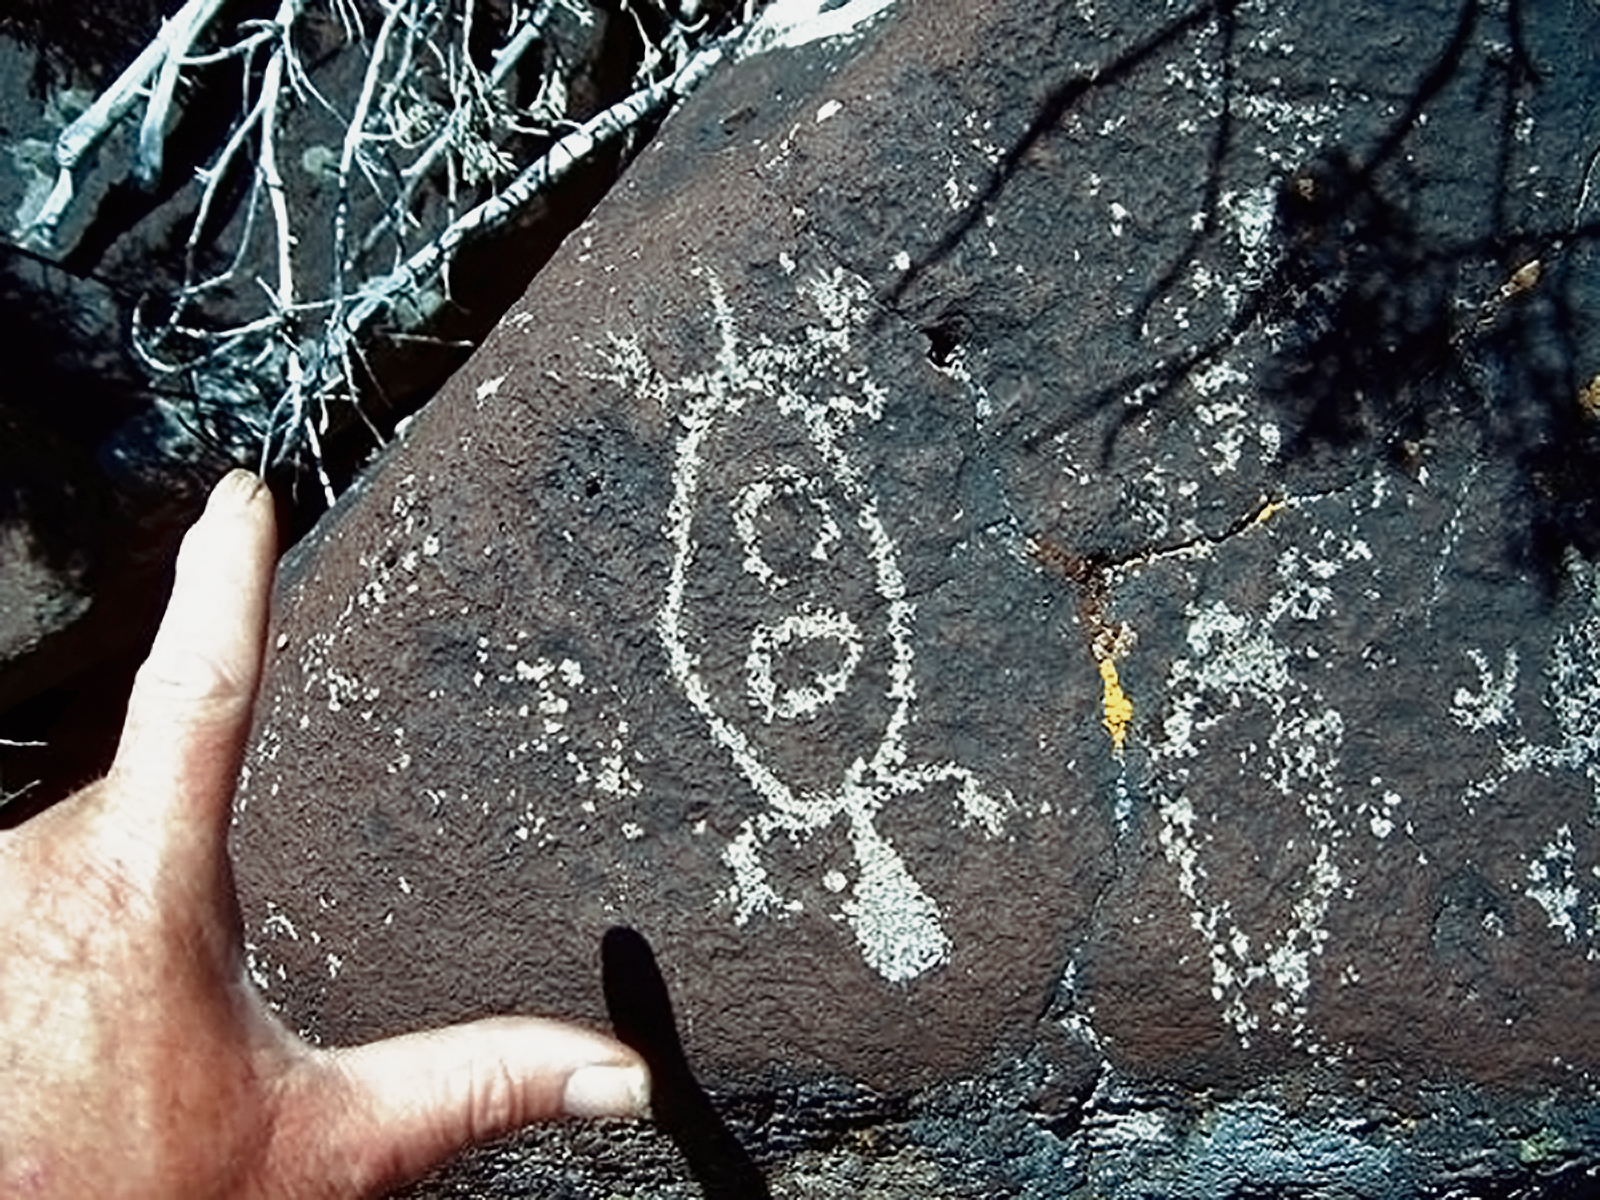 Rock Art Oregon Territory West of Jacobs Cabin Petroglyphs Pictographs Bradshaw Foundation Archaeology